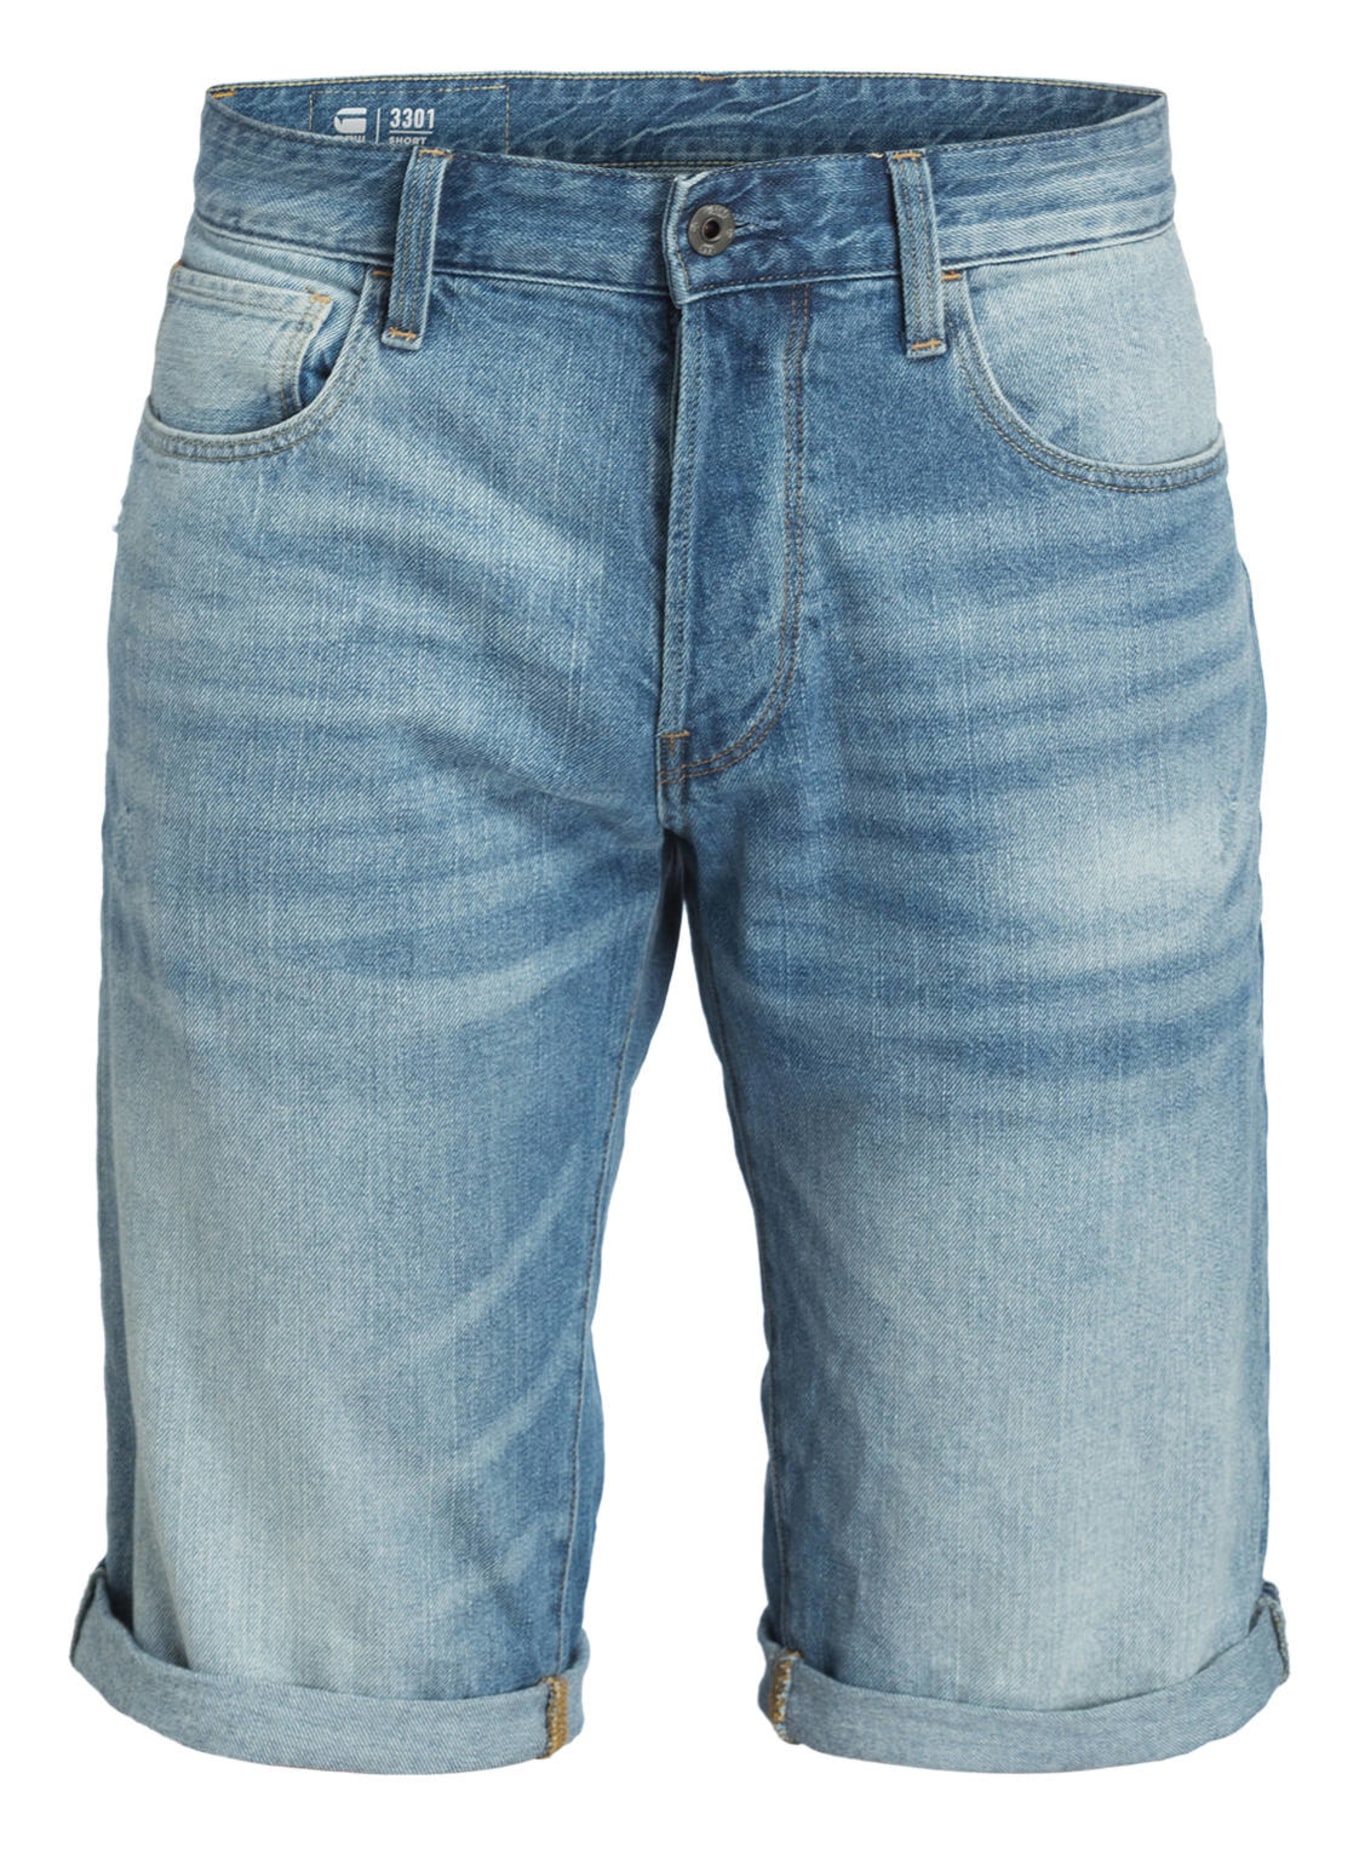 G-Star RAW Jeans-Shorts, Farbe: 424 AGED BLUE (Bild 1)